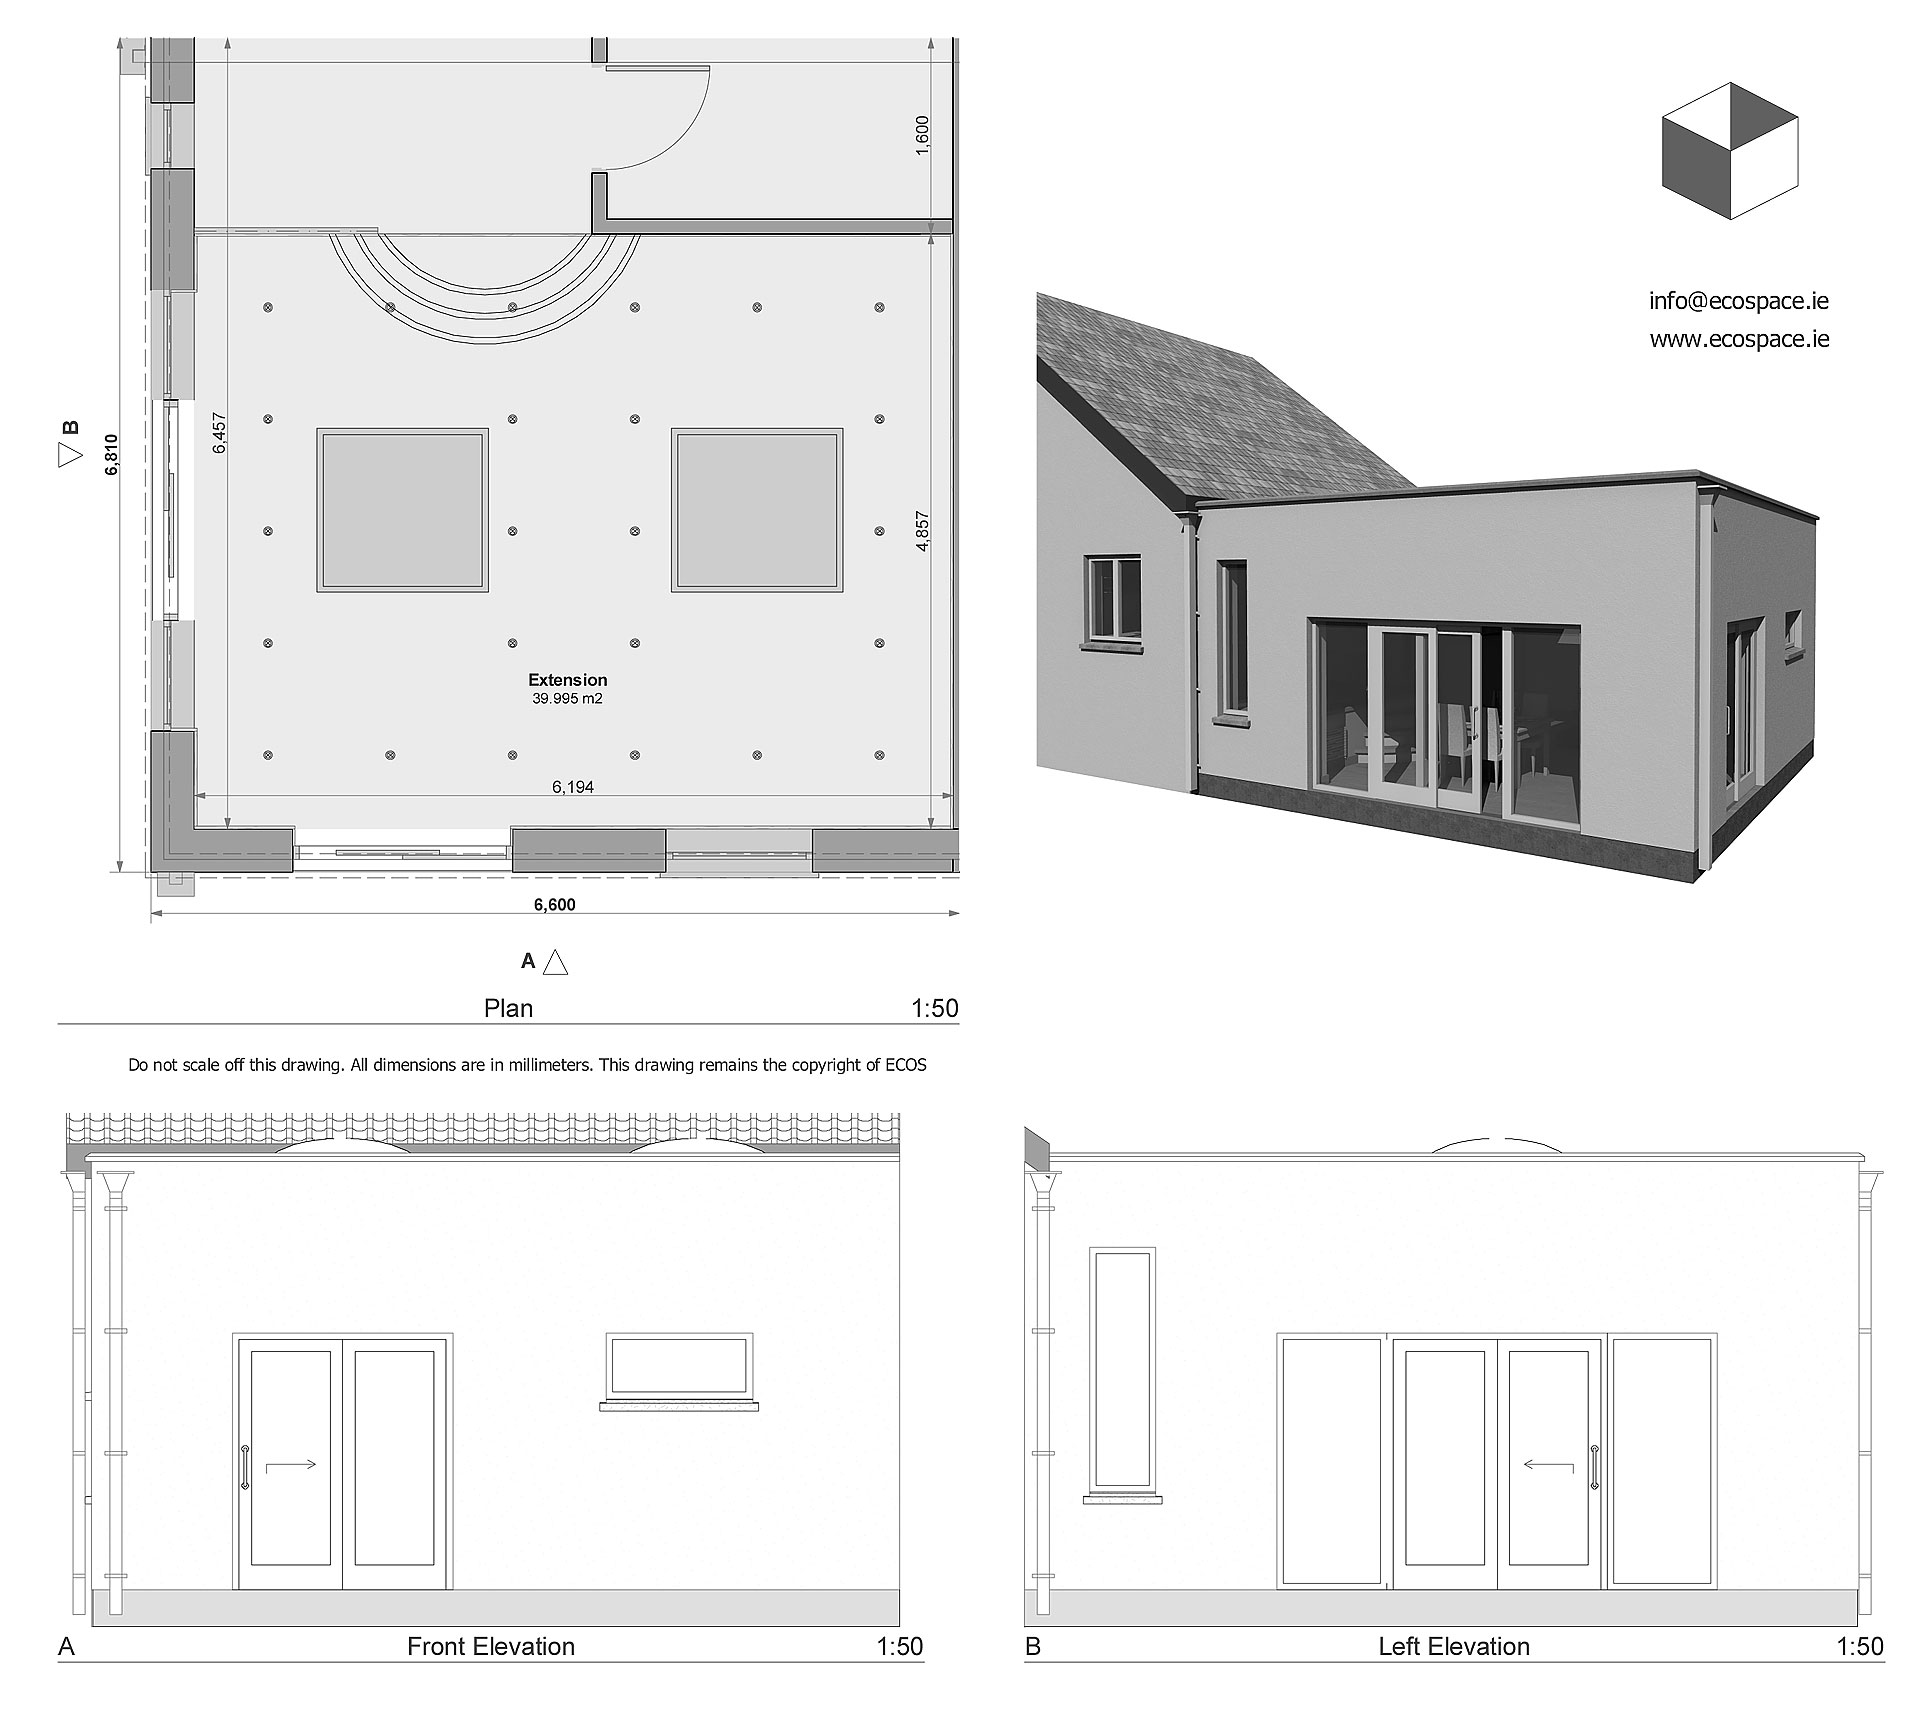 House extension design ideas & images, home extension plans | ECOS Ireland